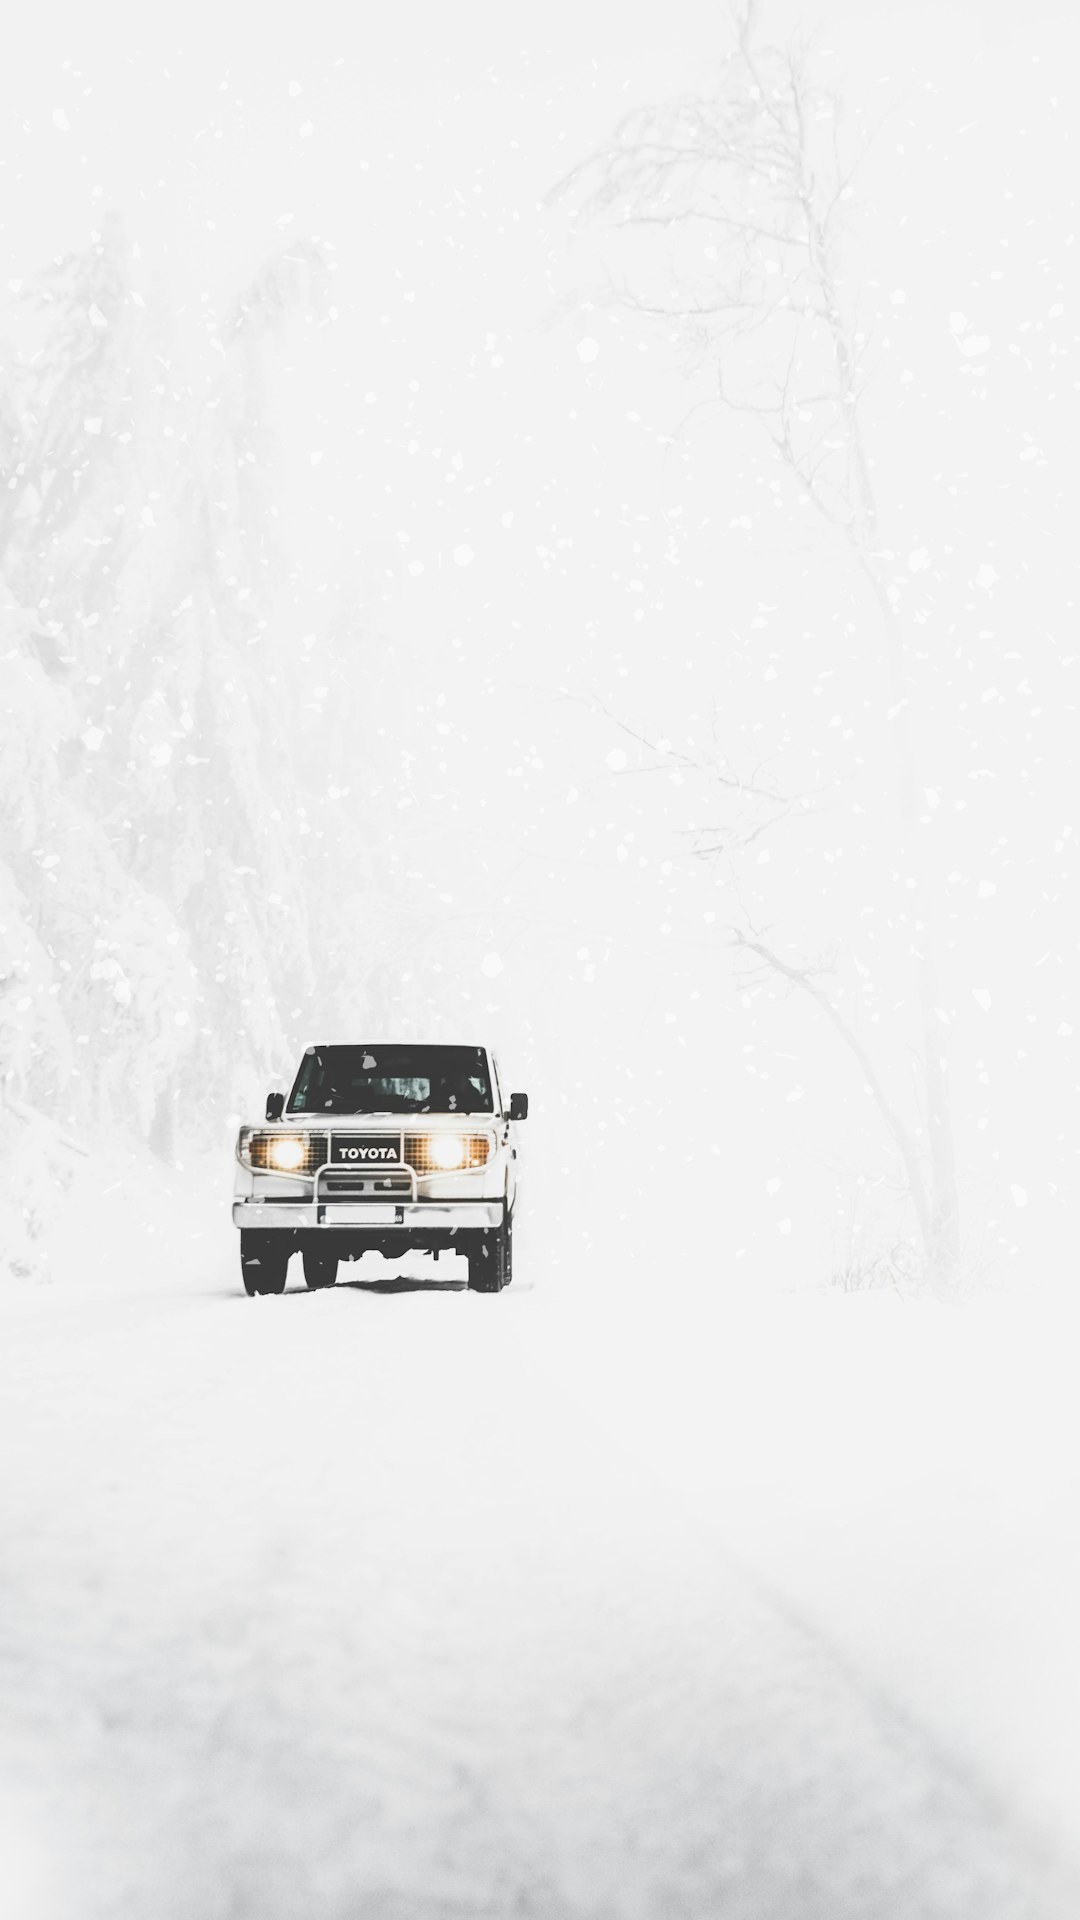 Toyota Land Cruiser in snow storm